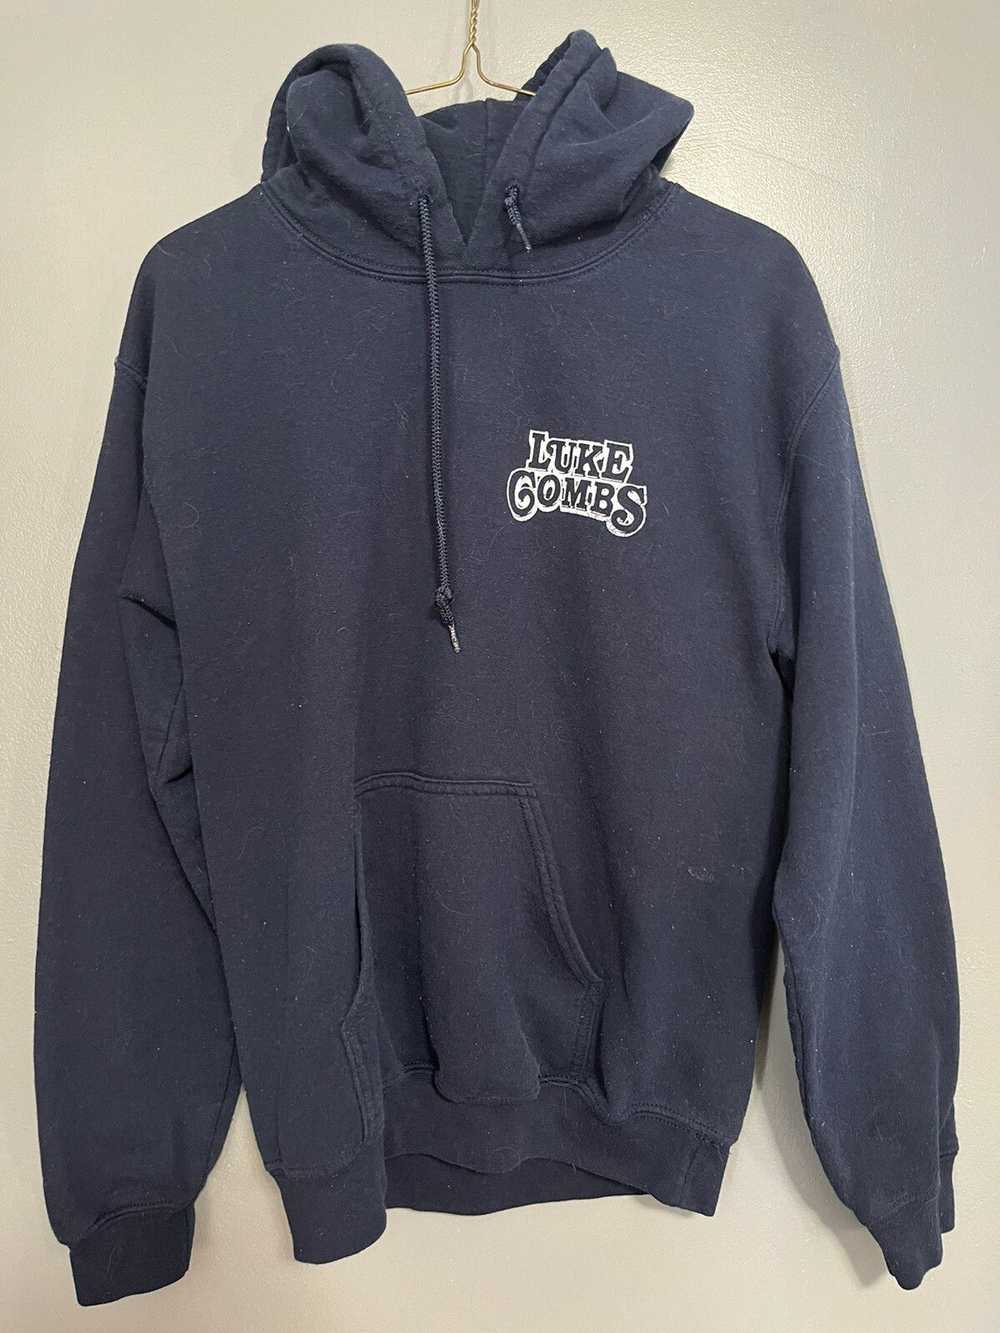 Other Luke Combs hoodie - image 1